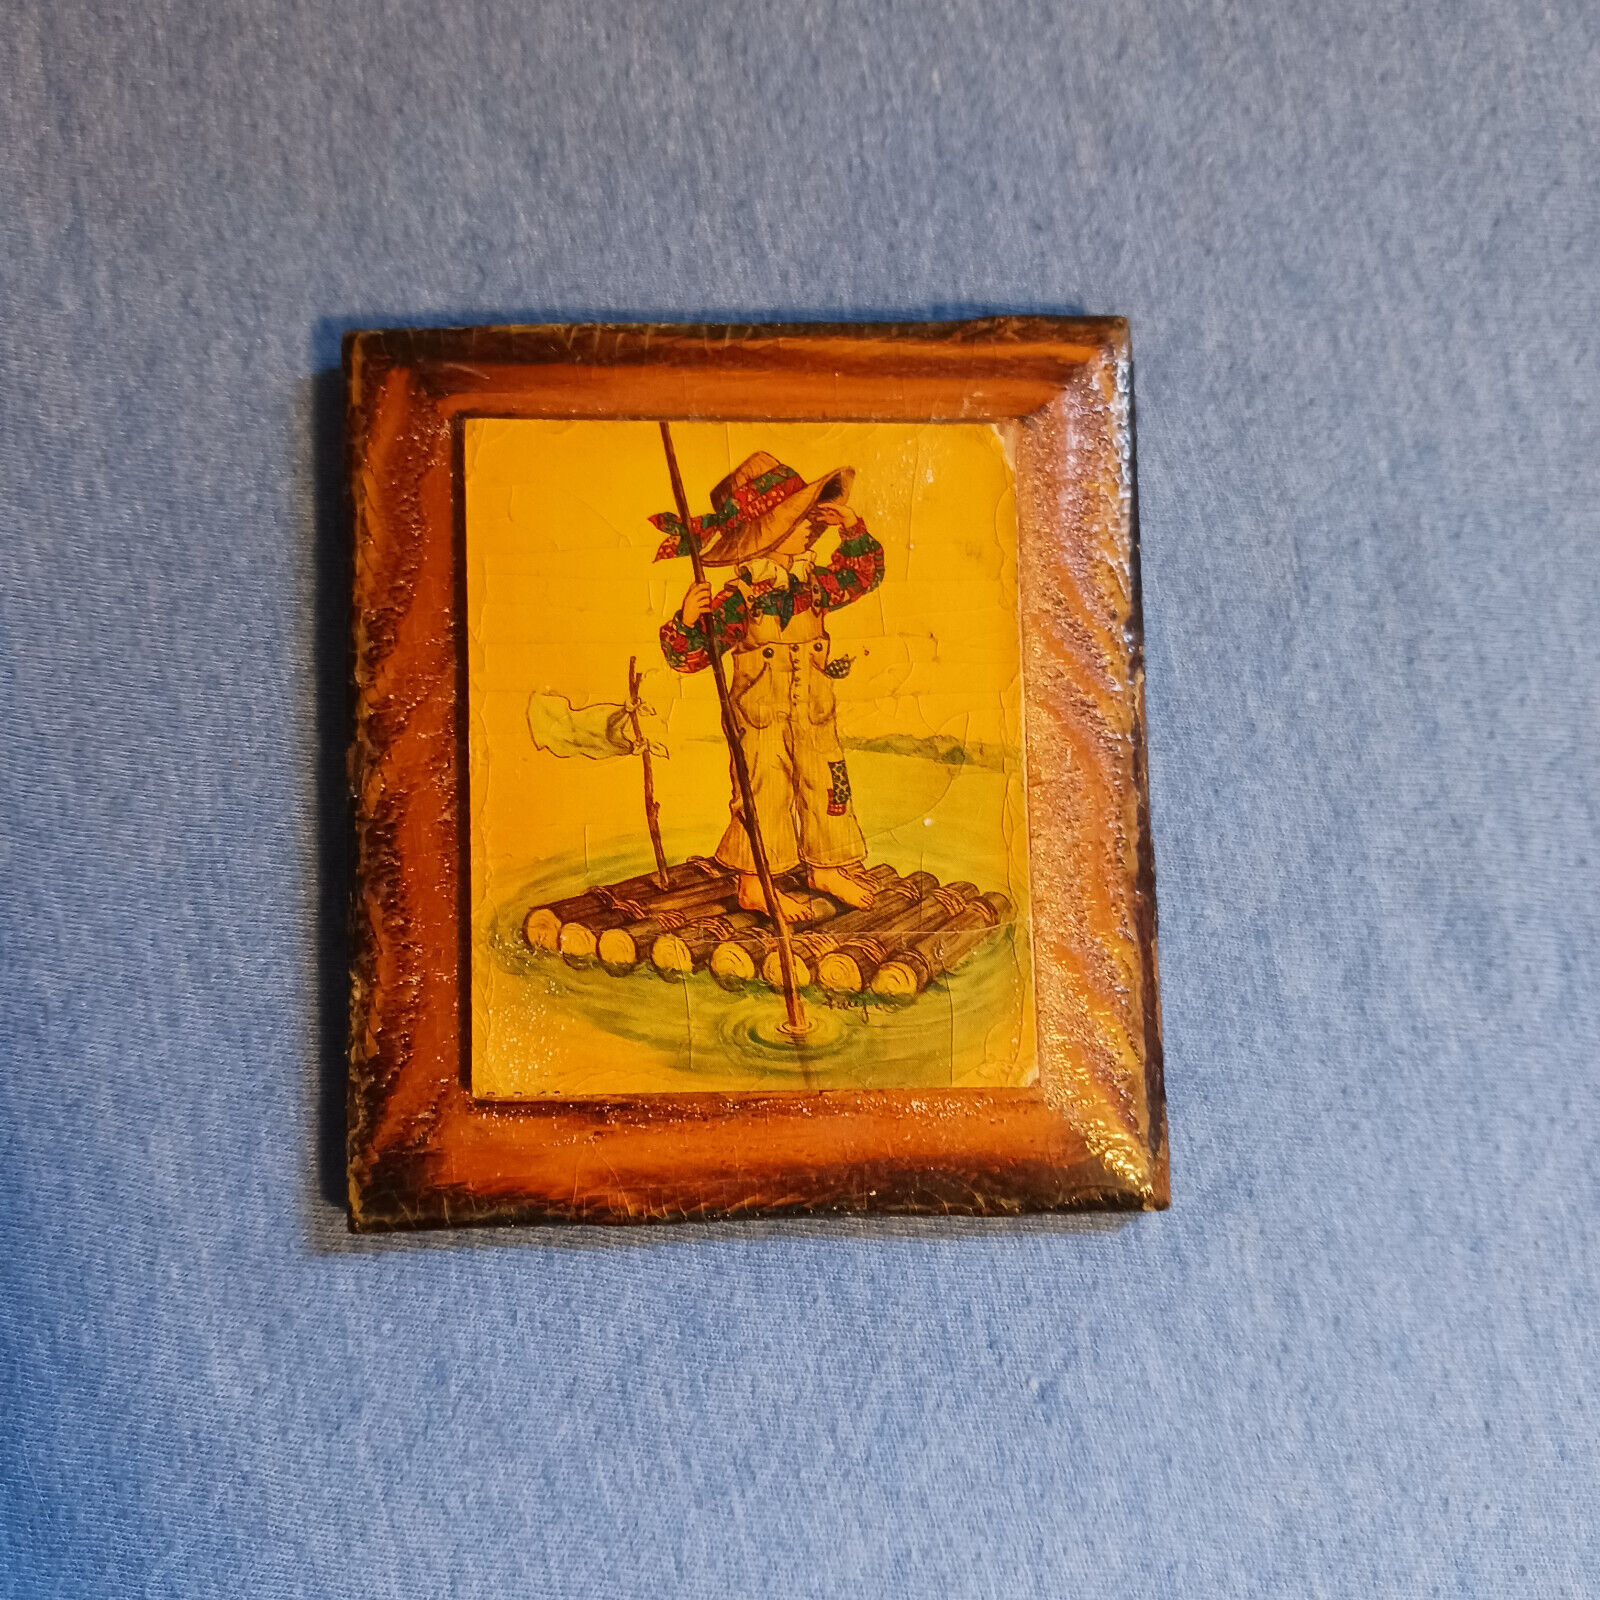 AMY MINI WOOD PRINT - Vintage Pathwork Kids Wood Plate, Raft Scene, 3.5 inch